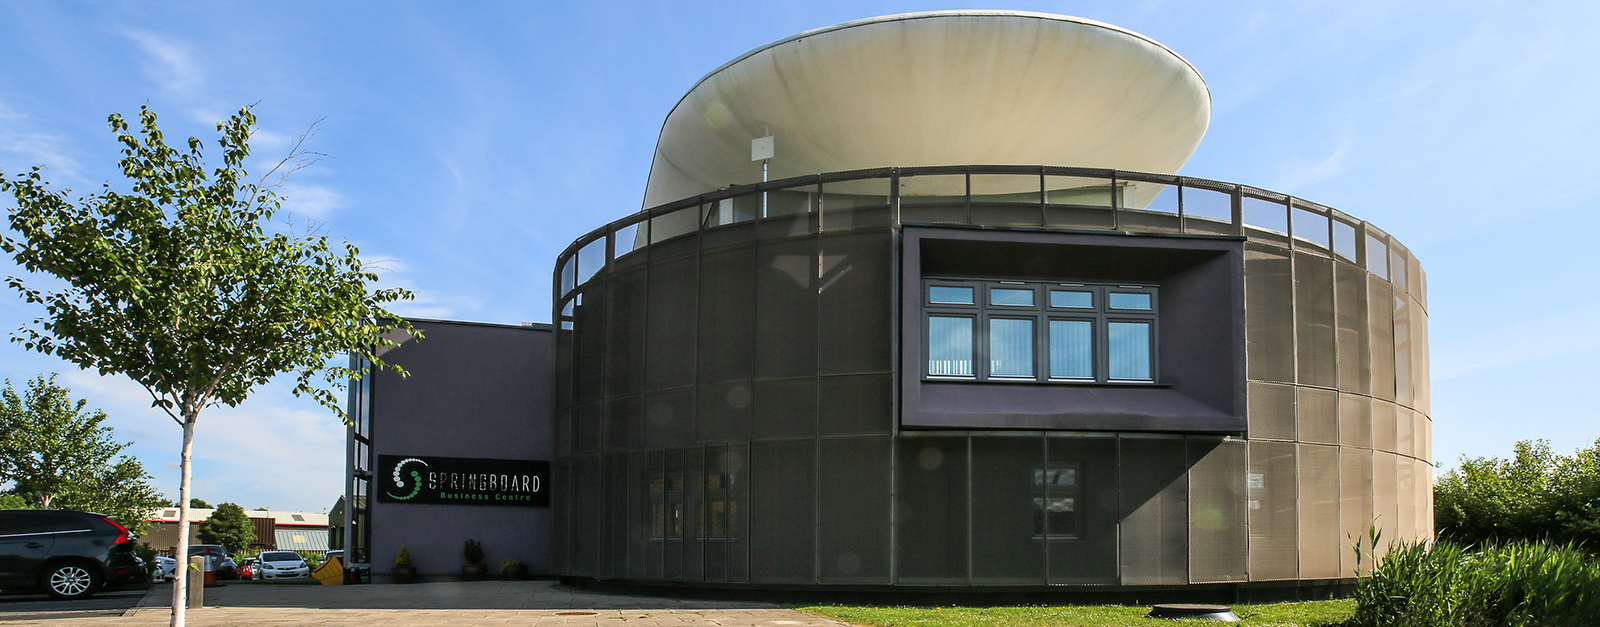 Springboard Business Centre external photograph